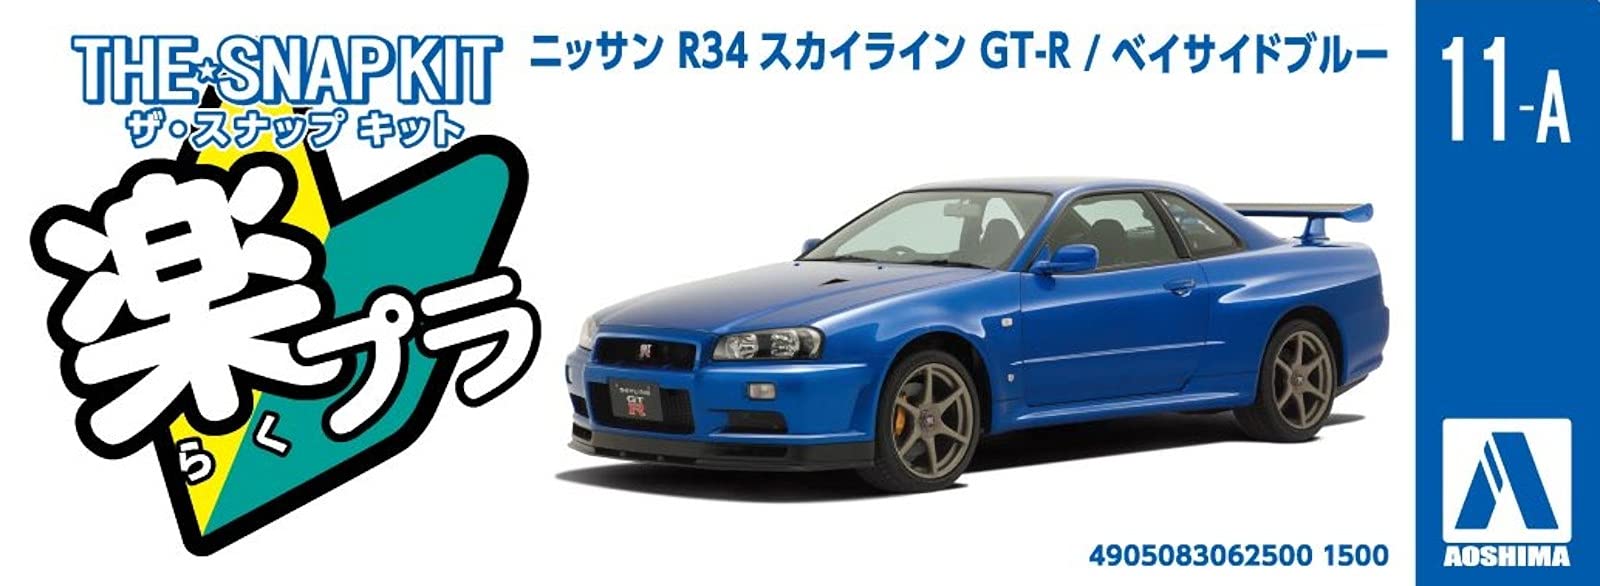 AOSHIMA The Snap Kit 1/32 Nissan R34 Skyline Gt-R Bayside Blue Plastic Model